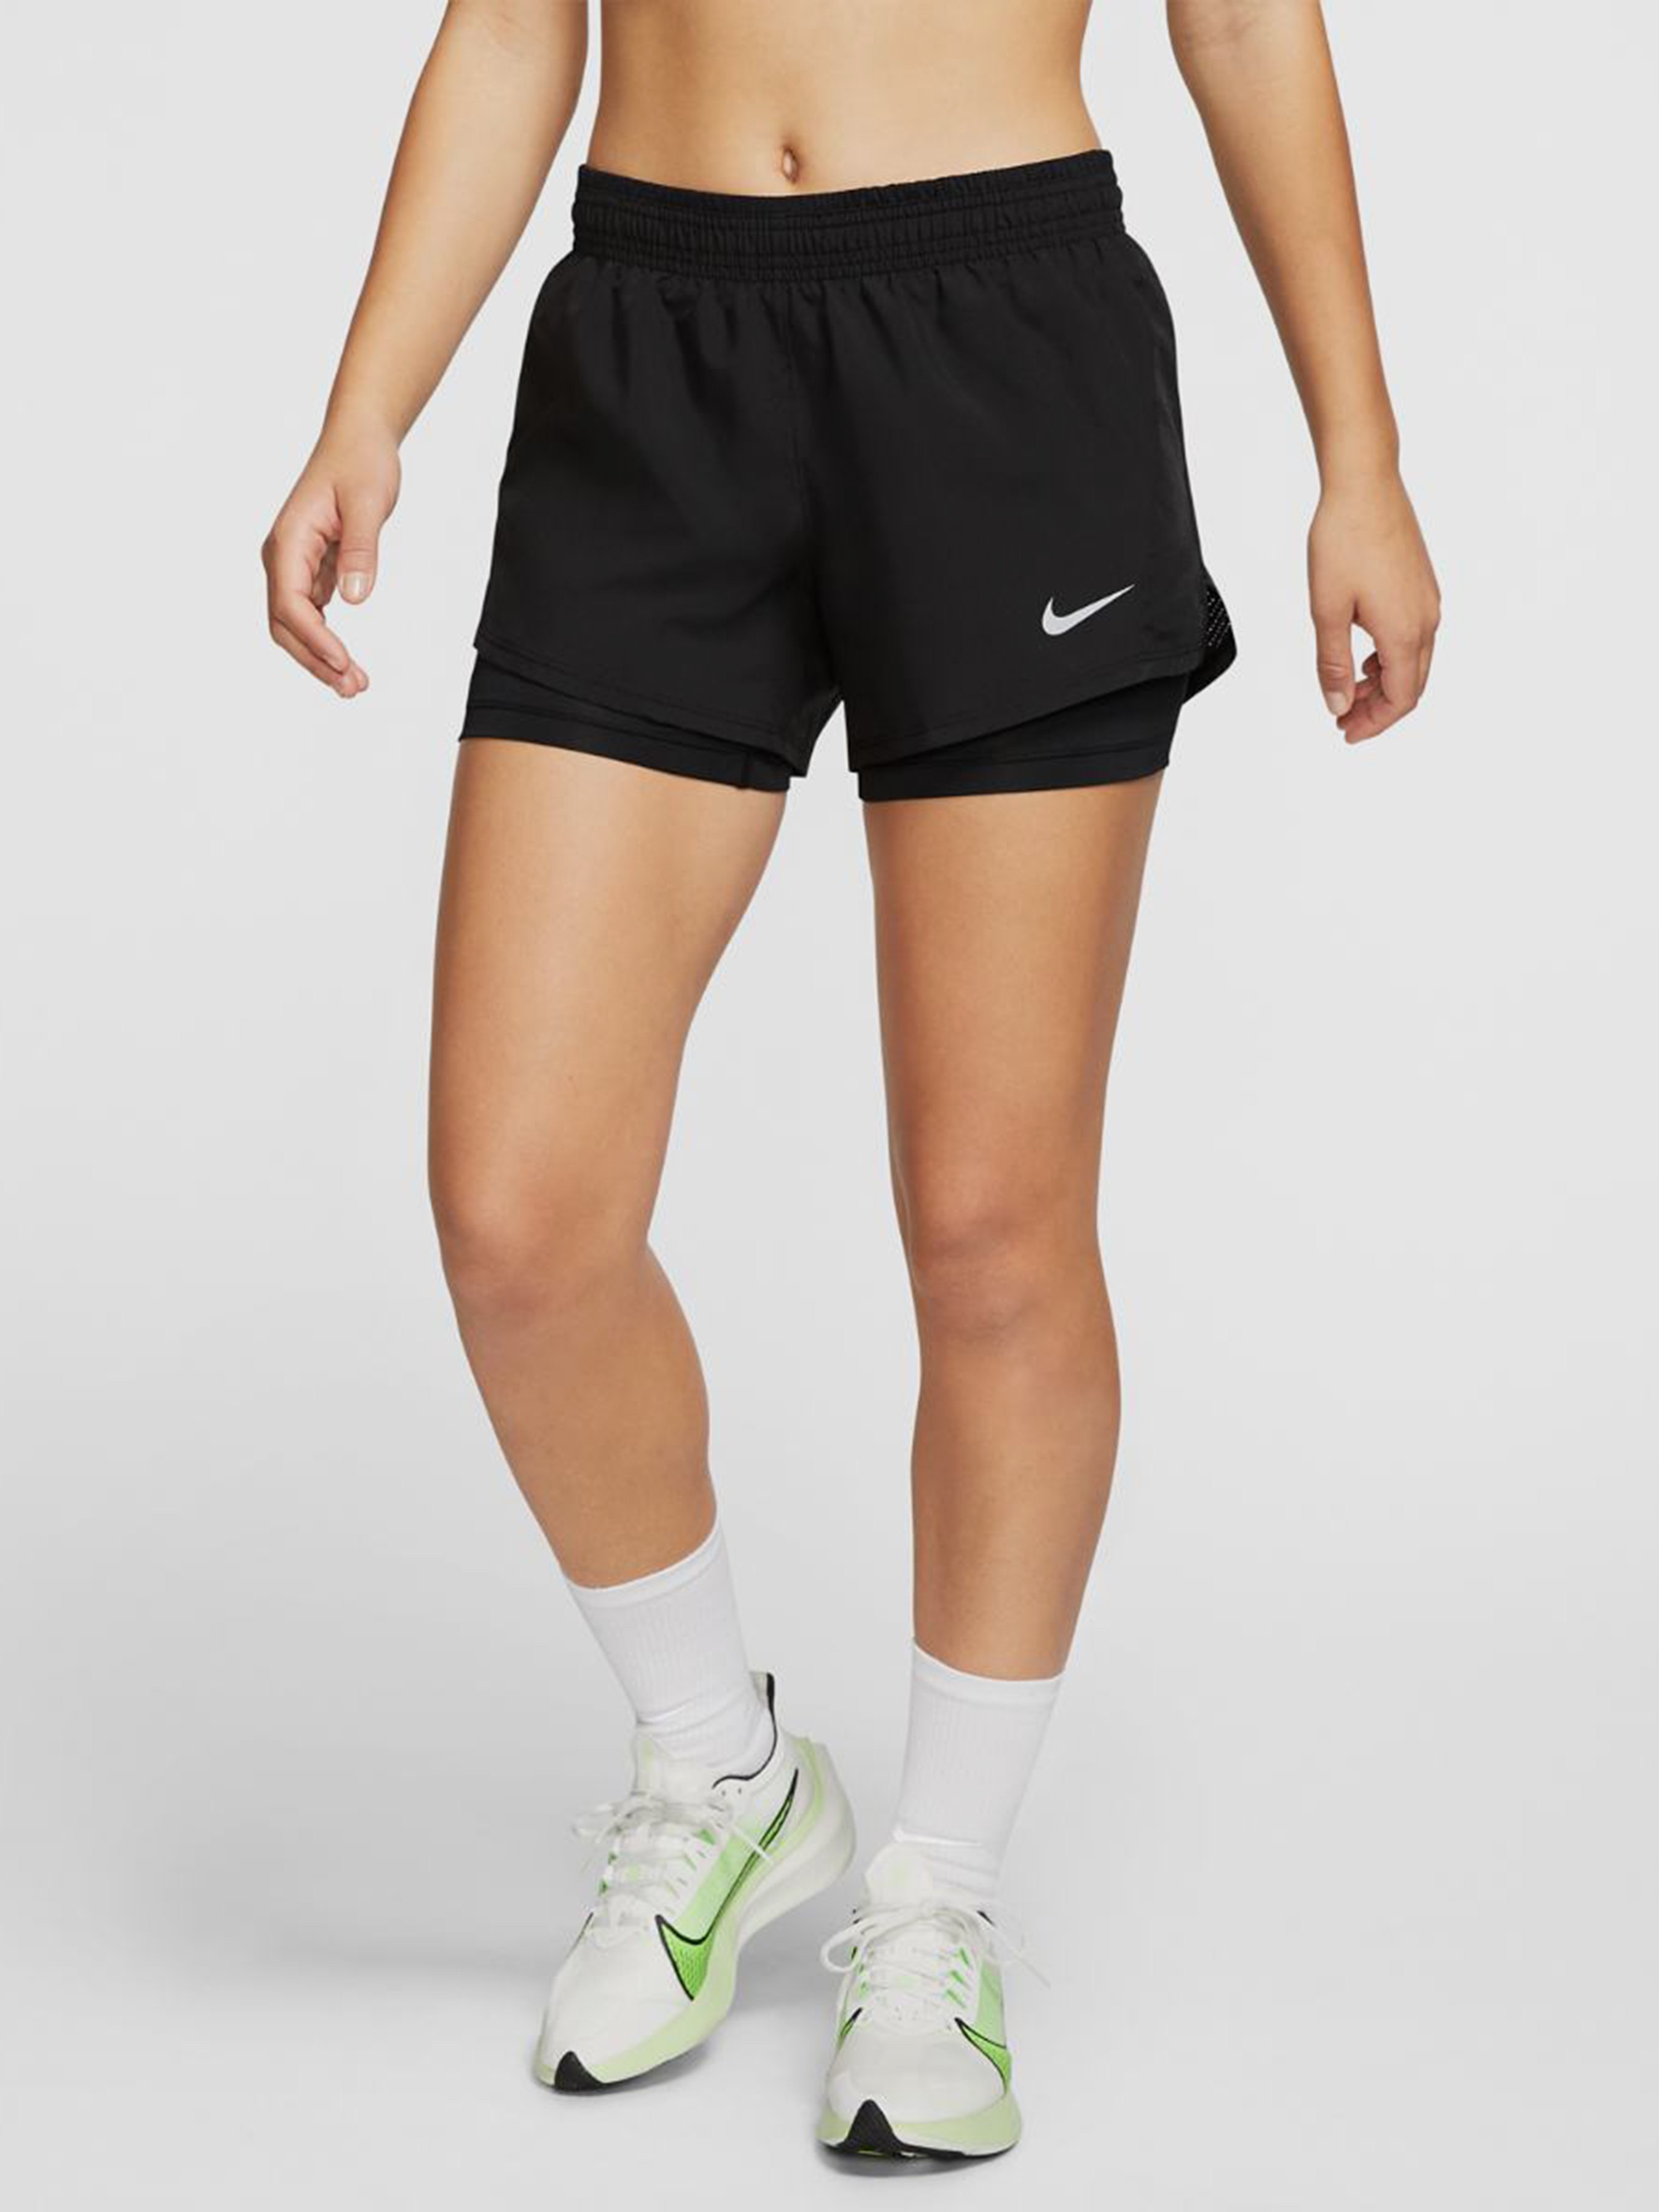 Черные шорты найк. Шорты найк 10к женские. Шорты найк ck1004-10. Nike tempo Luxe Run Division shorts. Шорты Nike Dri Fit женские.